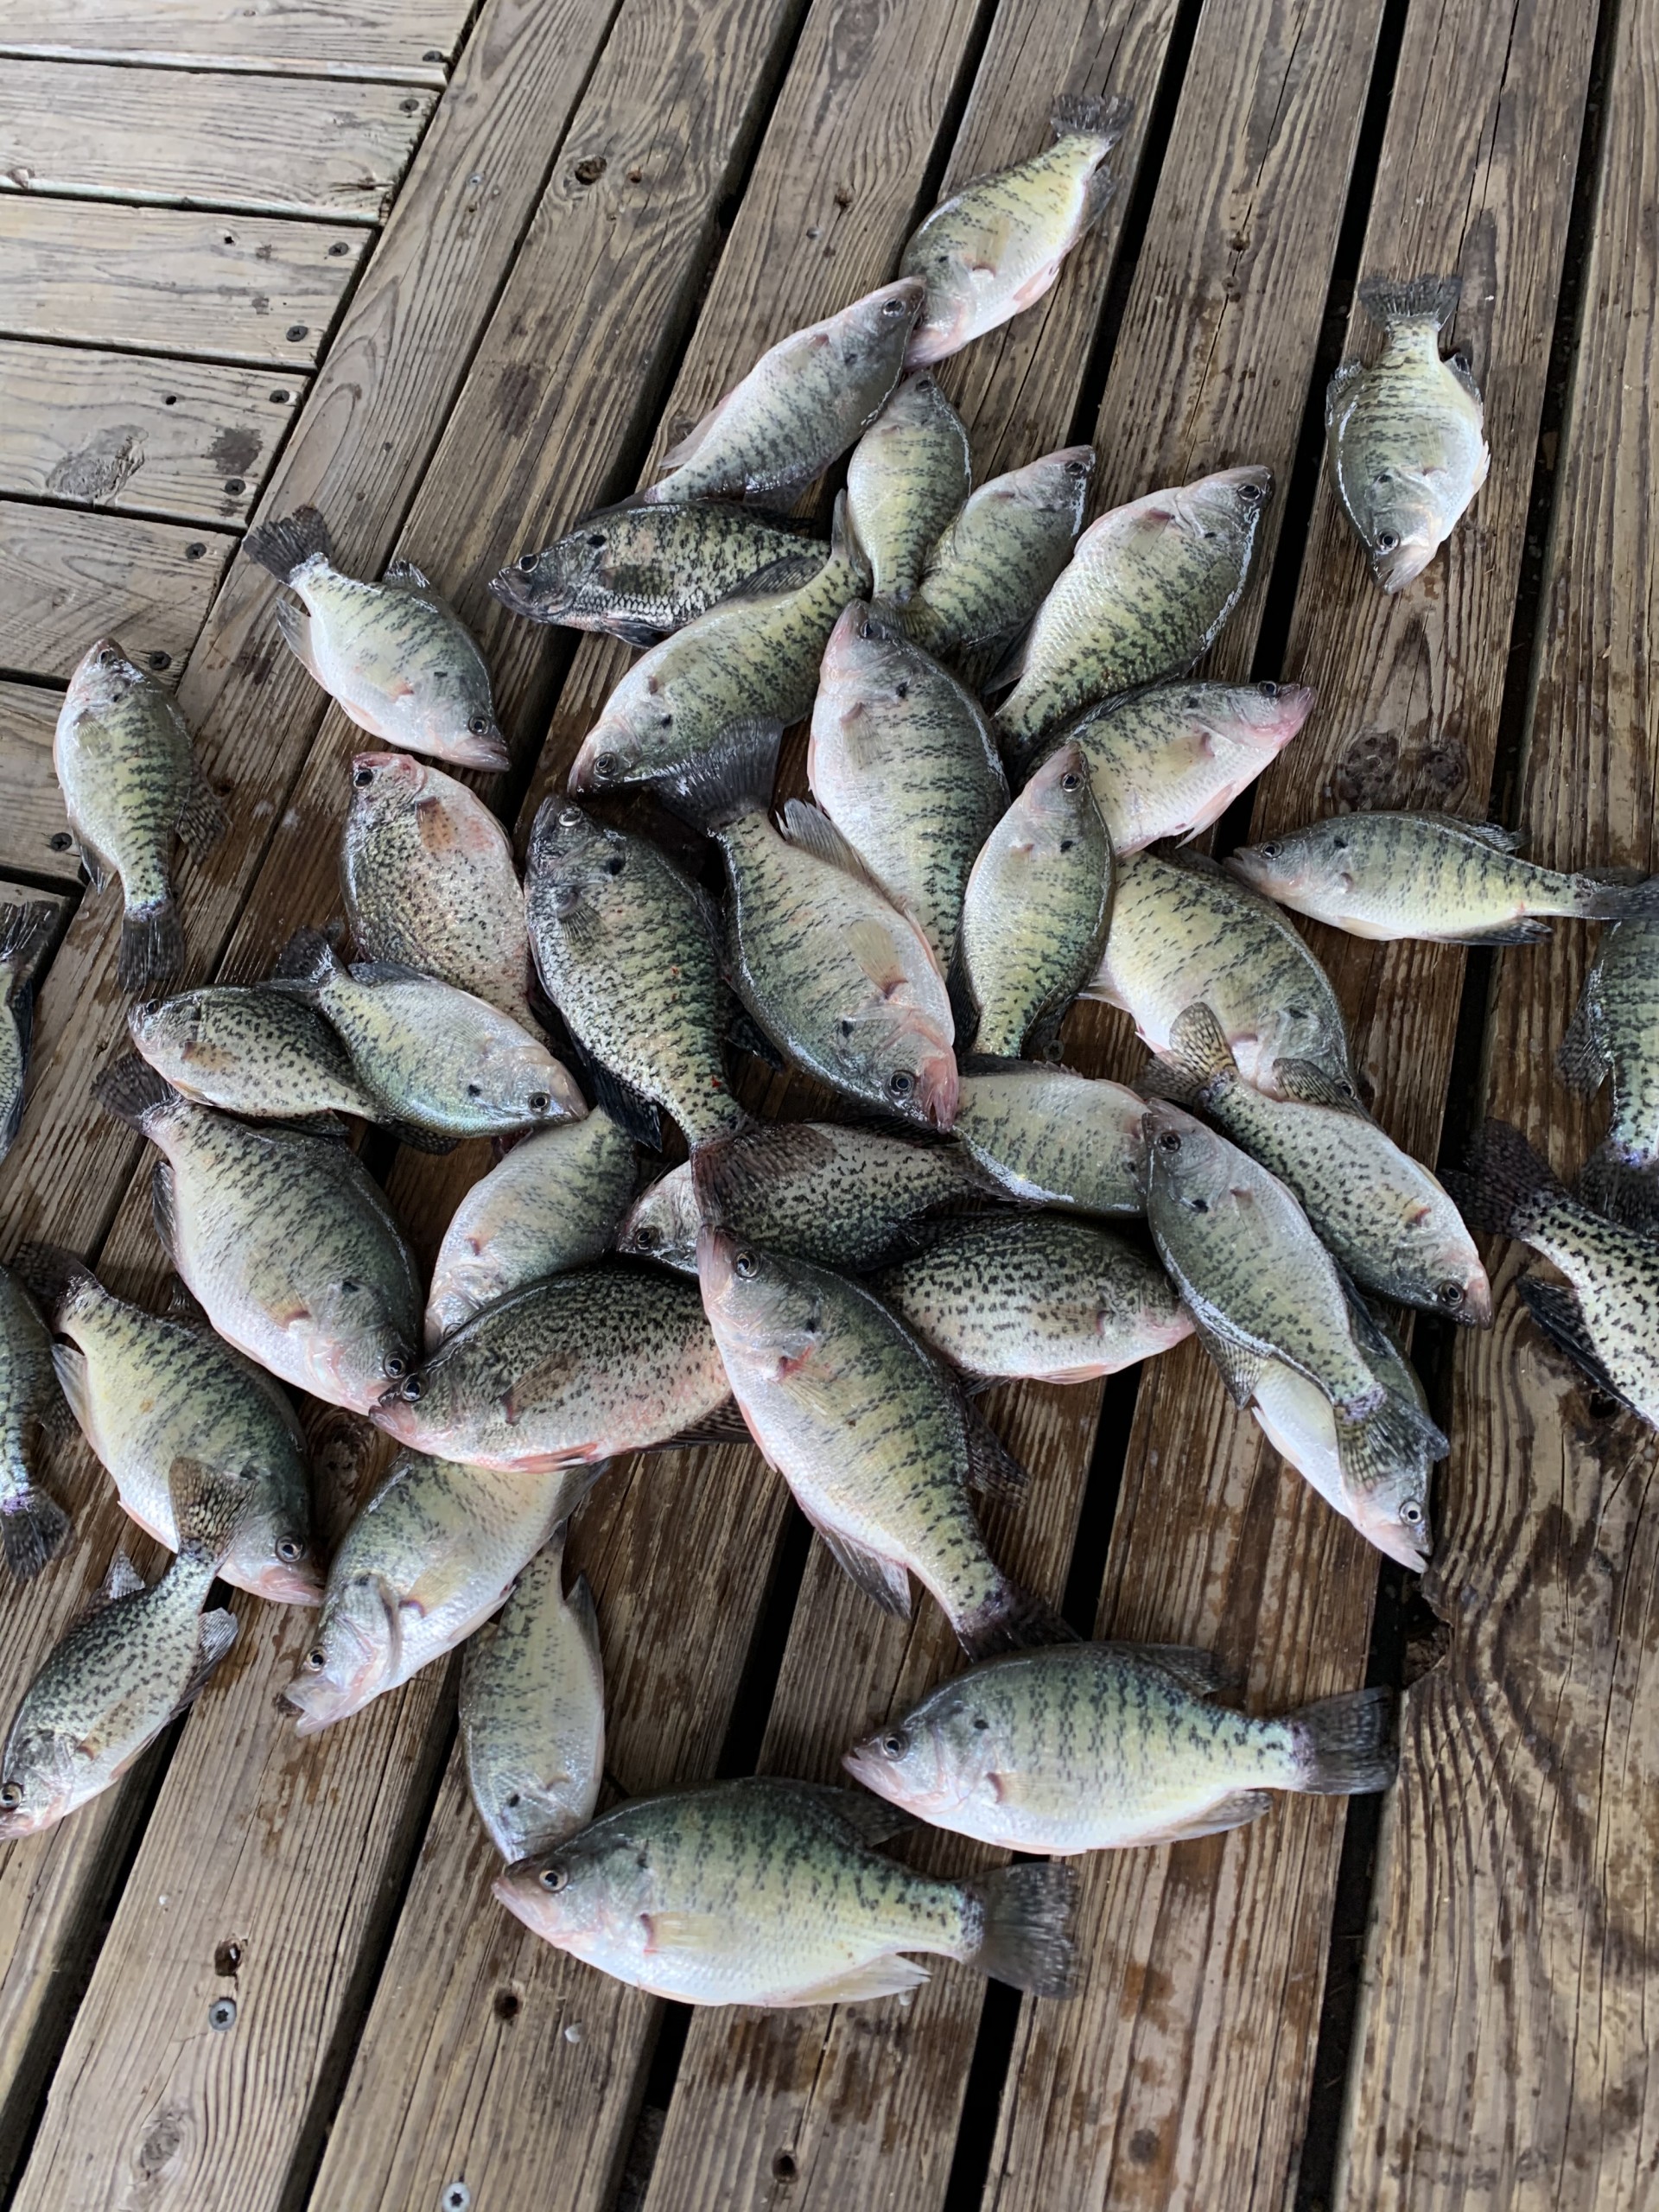 5/4/21 FREE Bob Bates' weekly fishing report - Truman Lake Fishing Intel